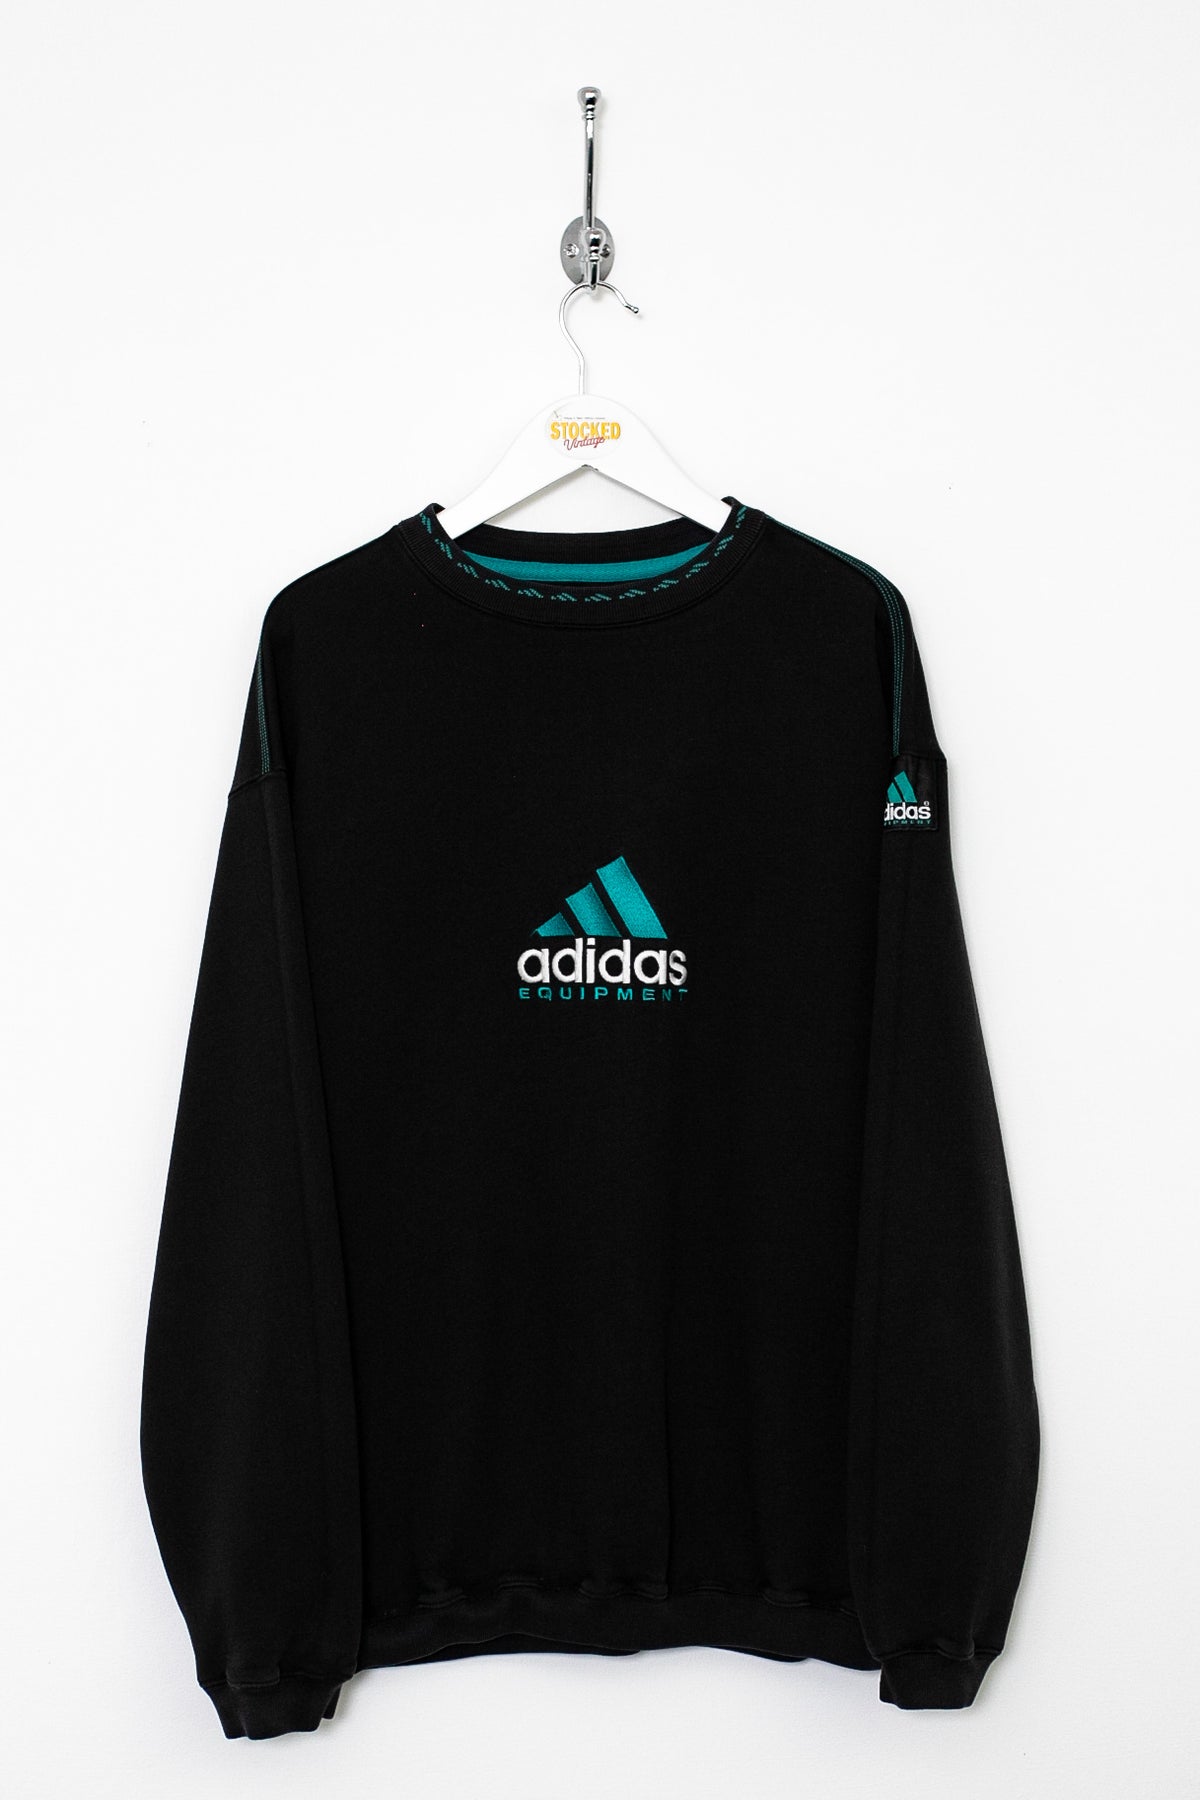 90s Adidas Equipment Sweatshirt (M)